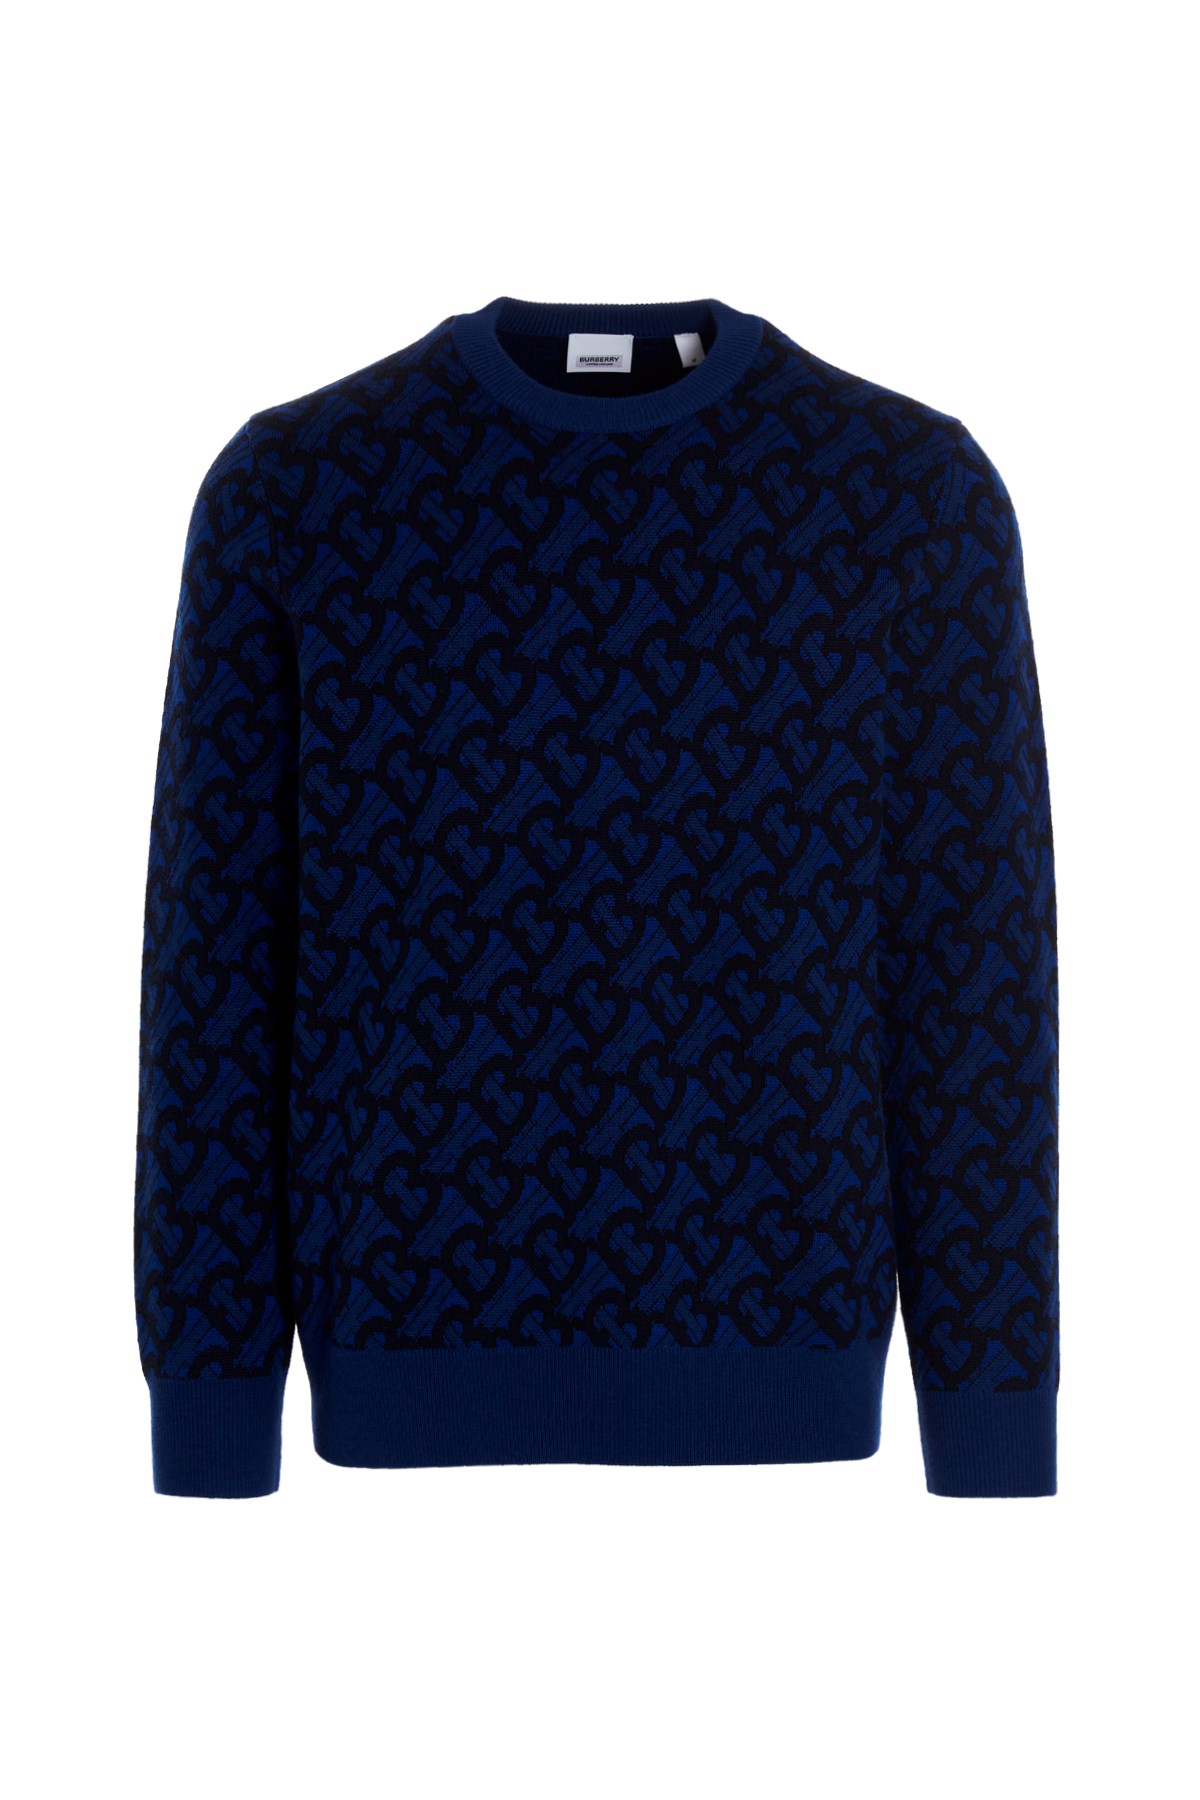 BURBERRY 'Rawlinson’ Sweater